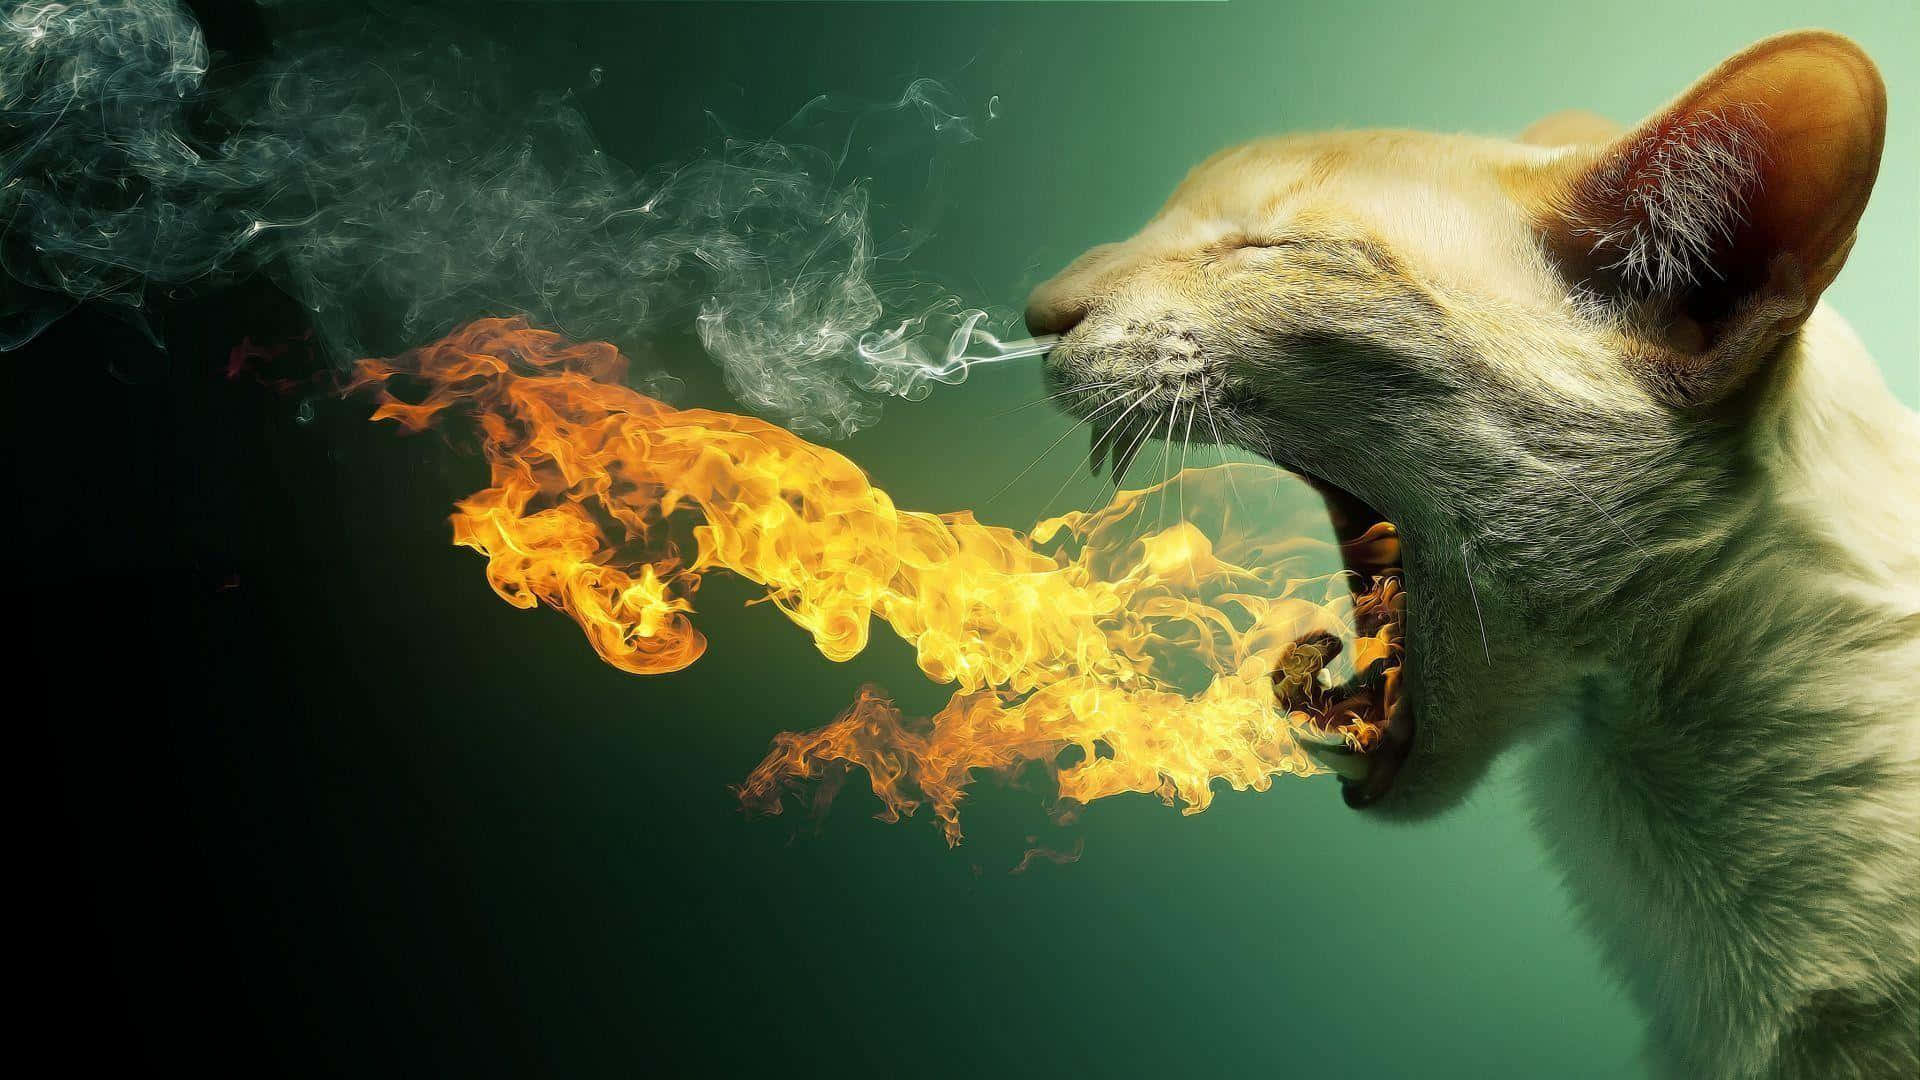 Fire Breathing Cat Artwork Wallpaper